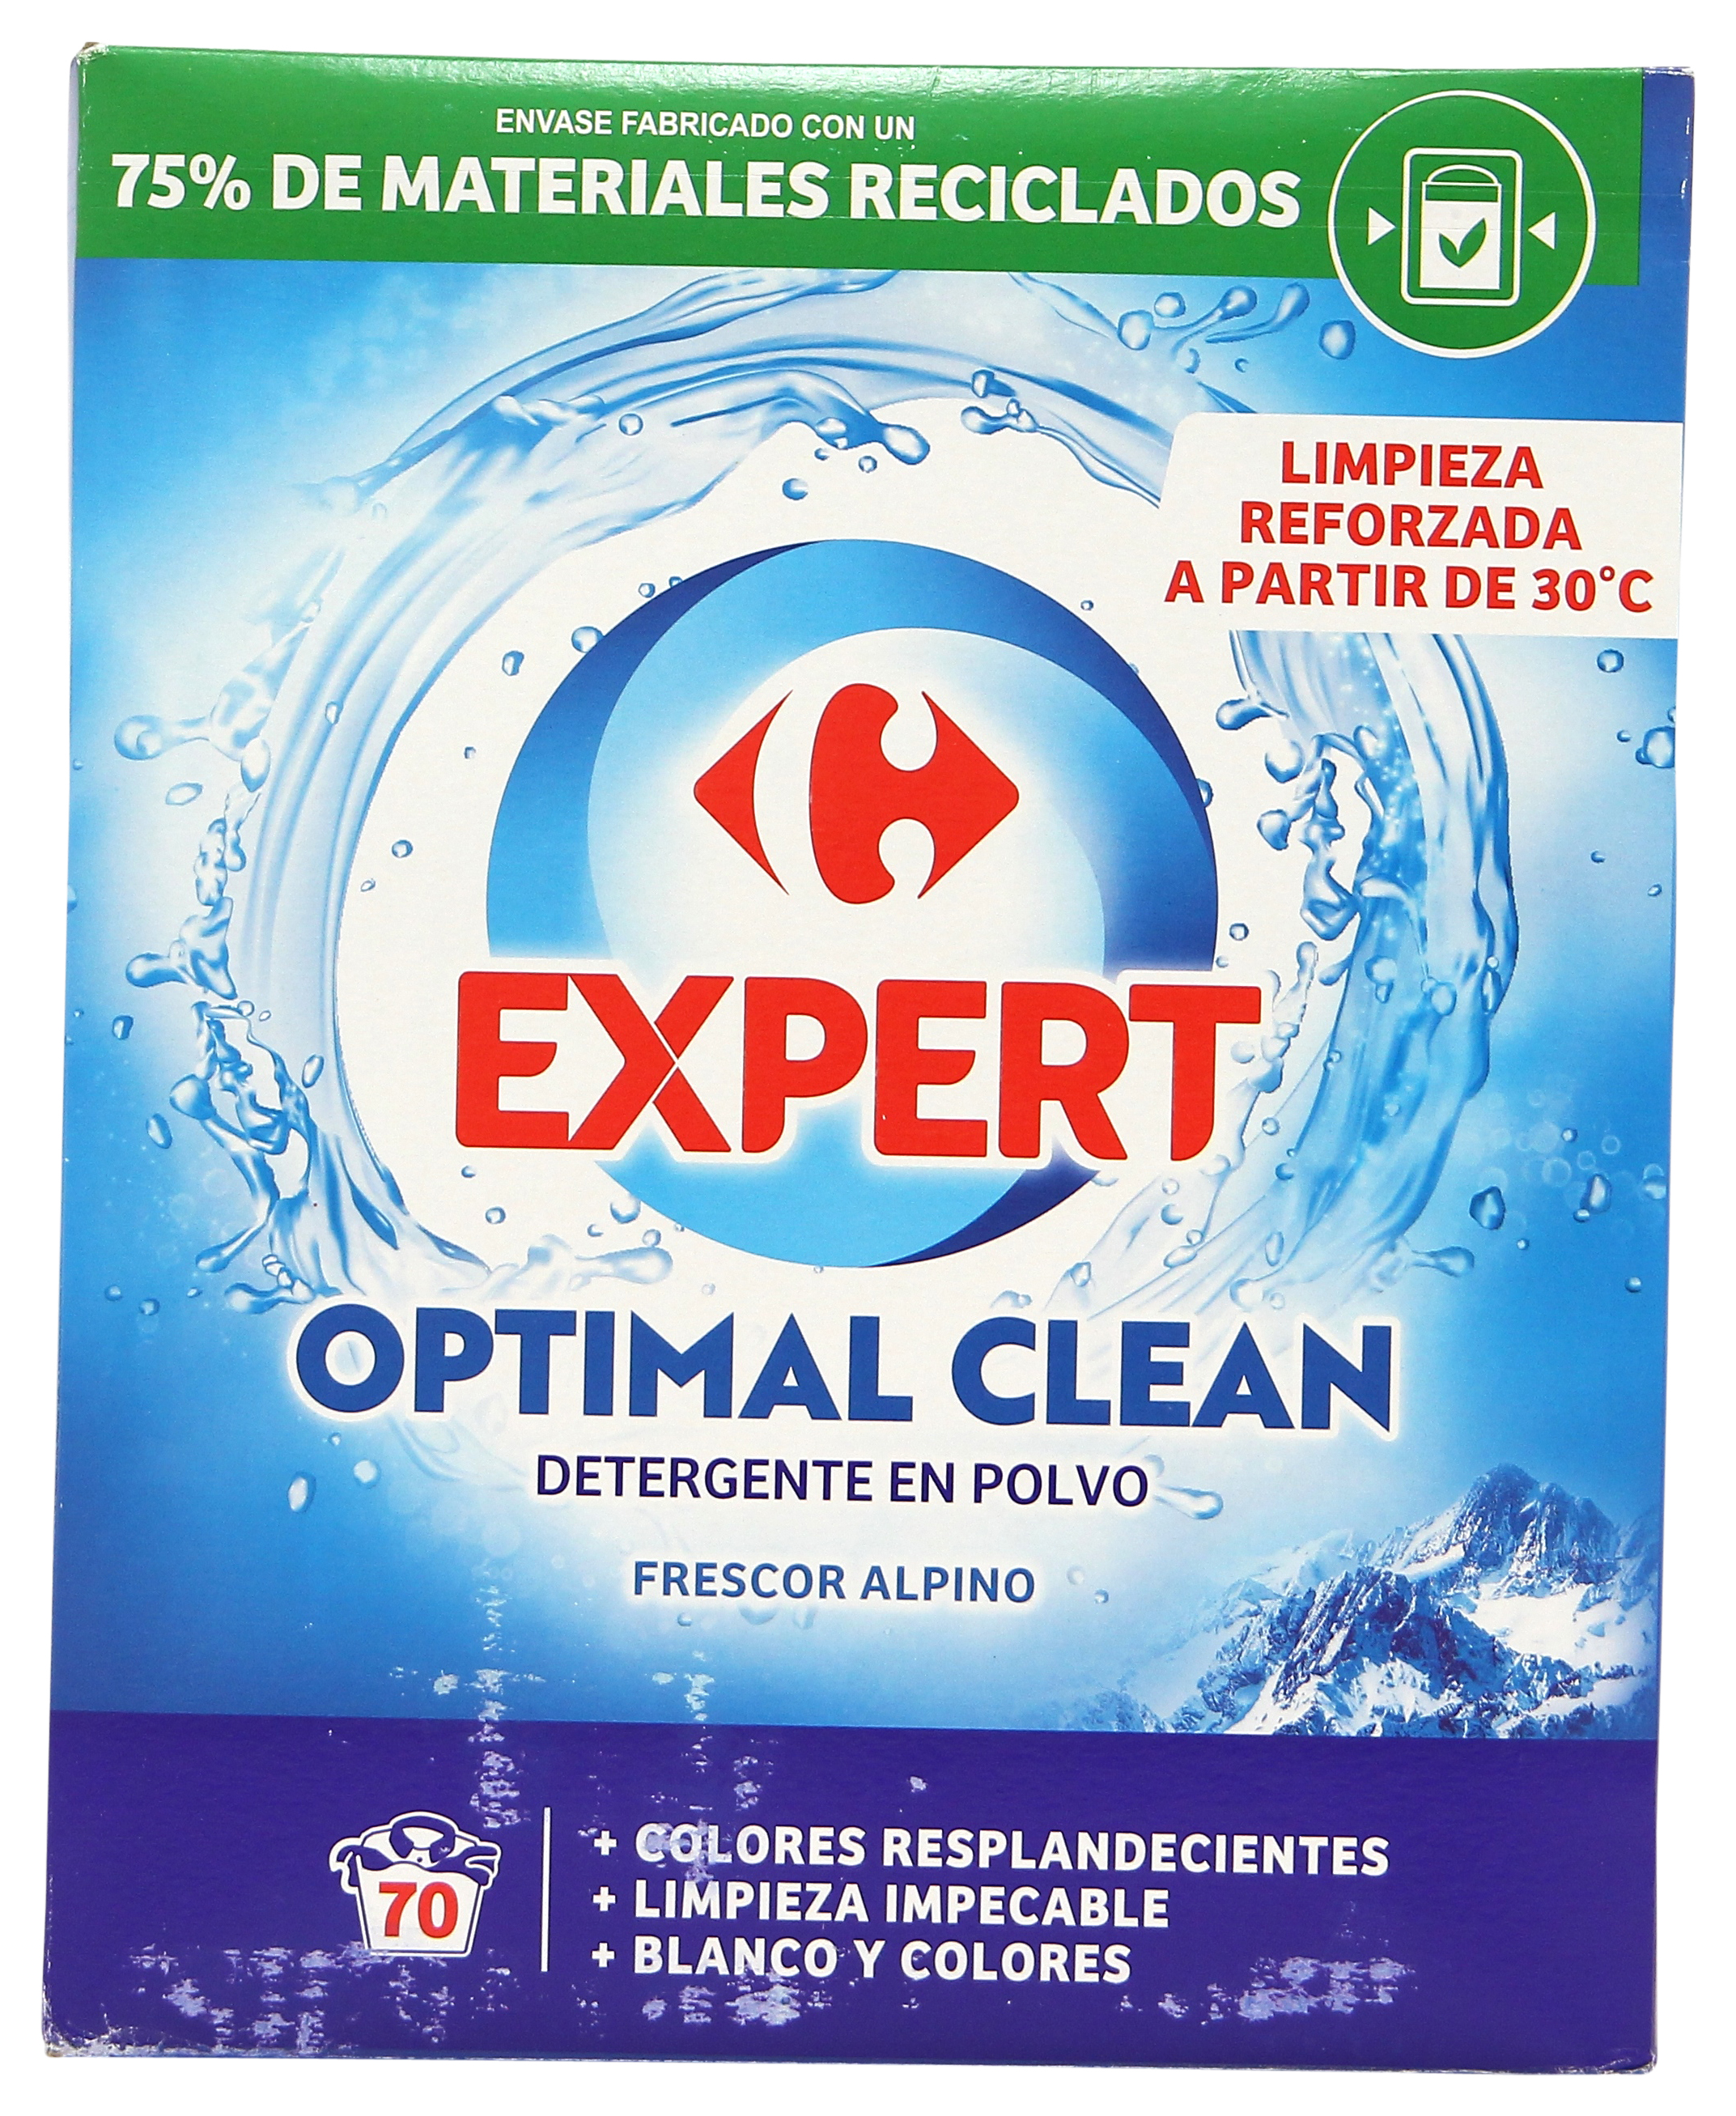 EXPERT OPTIMAL CLEAN FRESCOR ALPINO